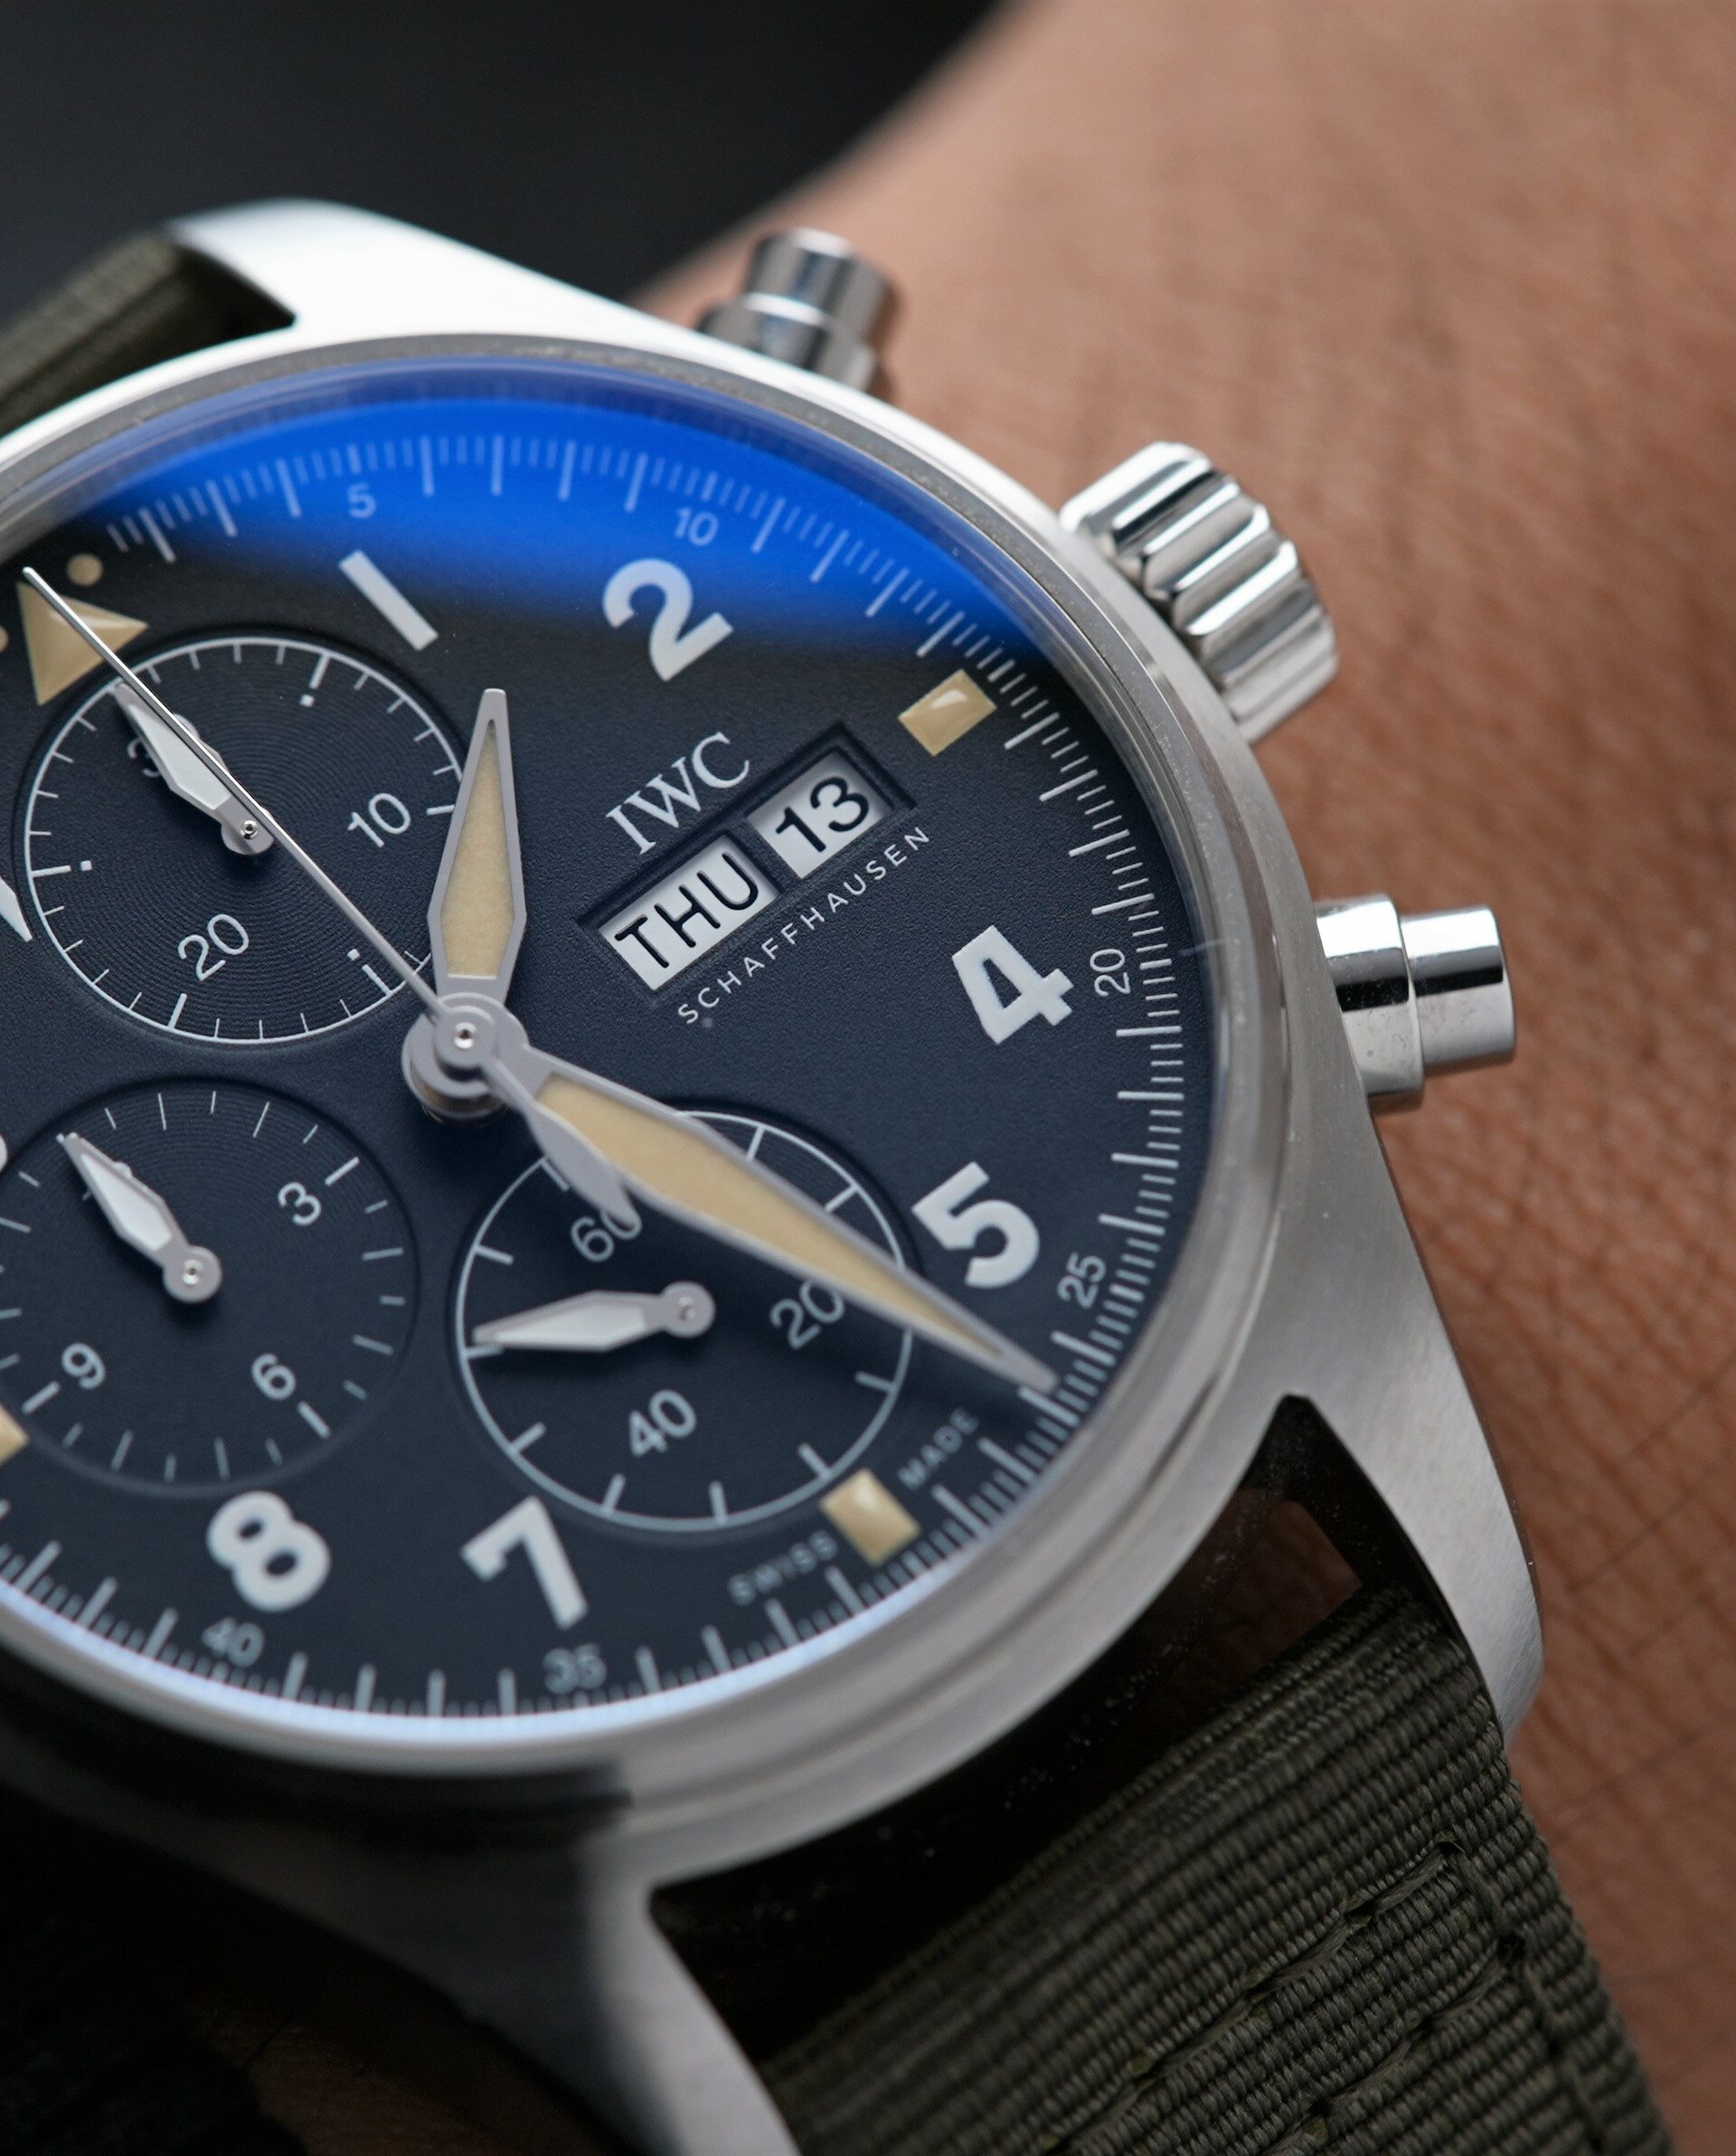 IWC Pilot Spitfire Chronograph 41MM IW387901 wristwatch displayed on the wrist.